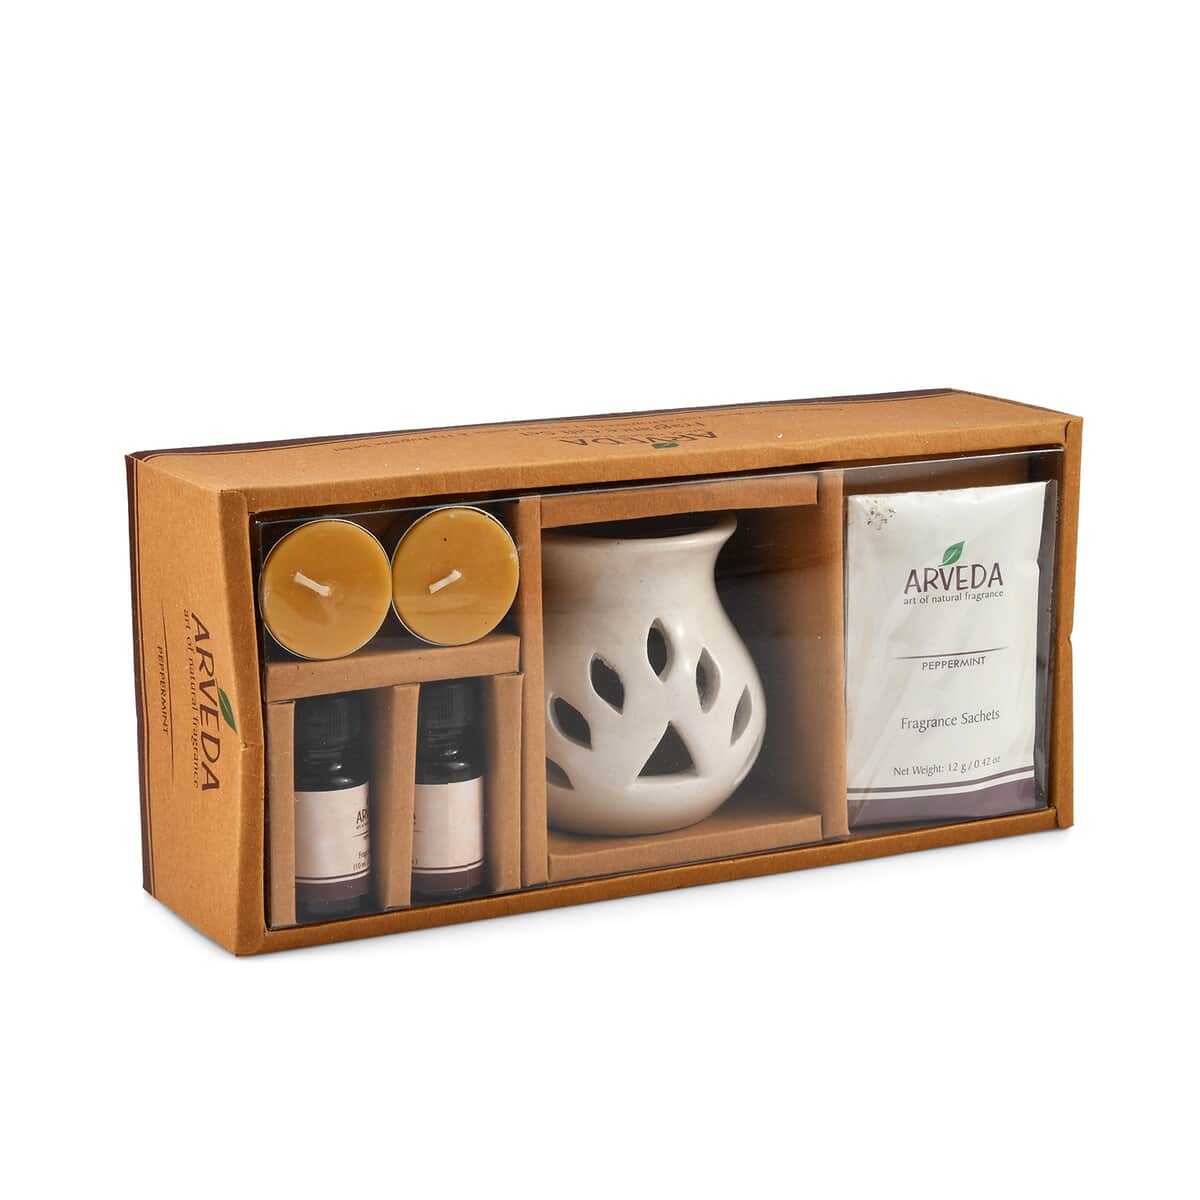 Arveda Peppermint Fragrance Gift Set (Ceramic Aroma Oil Burner, 2x Fragrance Oils, 2 Tea Light Candles, & Fragrance Sachet) image number 6